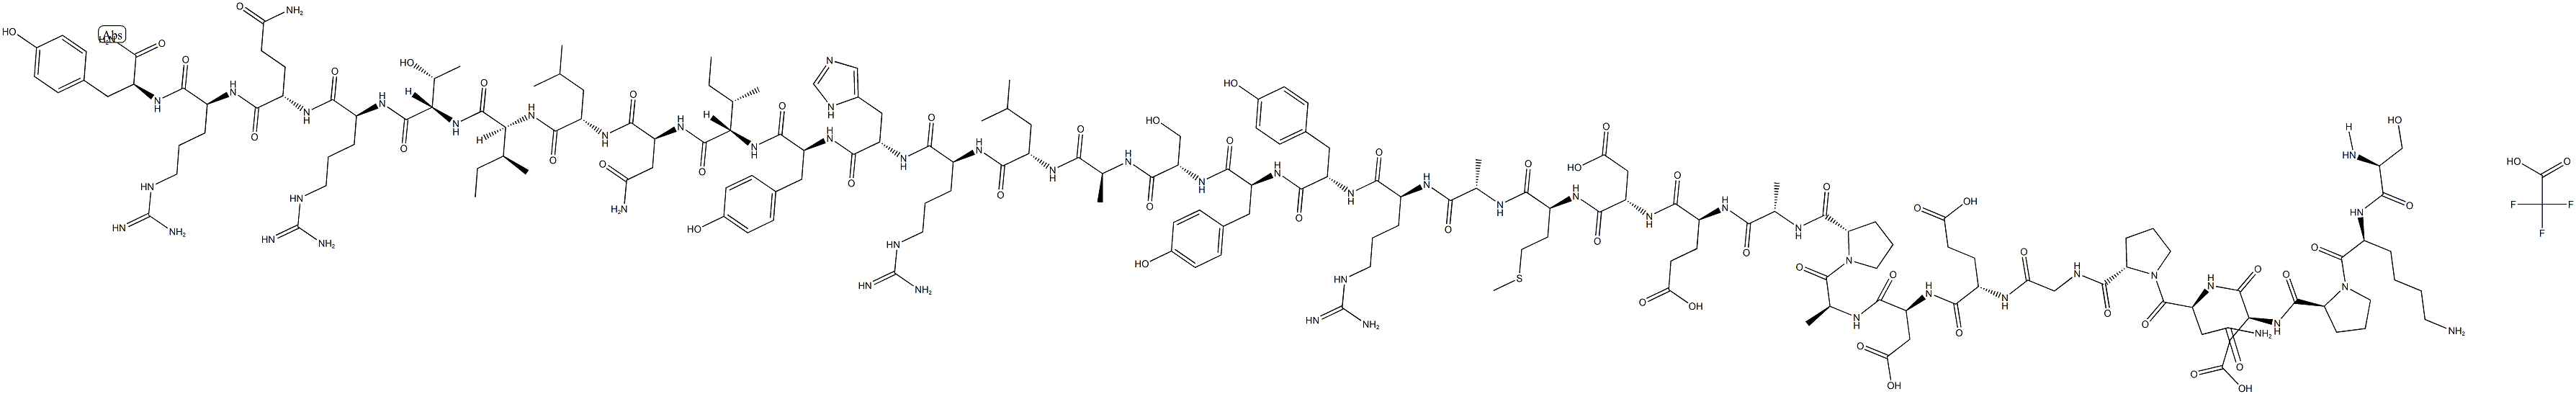  Neuropeptide Y (3-36) (human, rat) (trifluoroacetate salt)